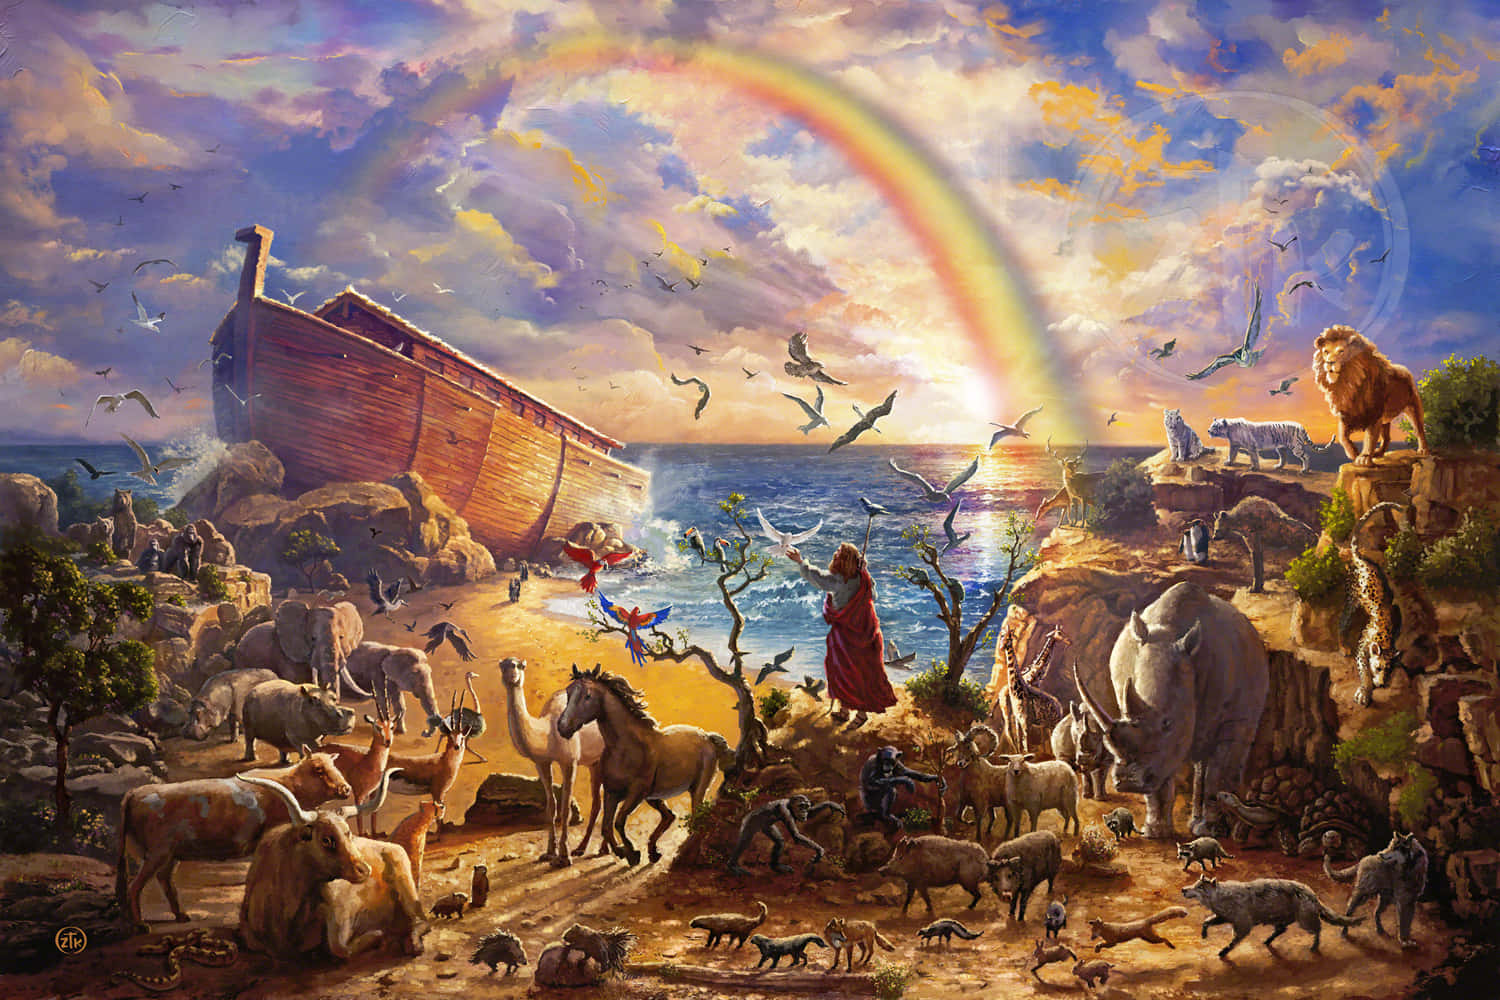 Noah's Ark With Animals And Rainbow